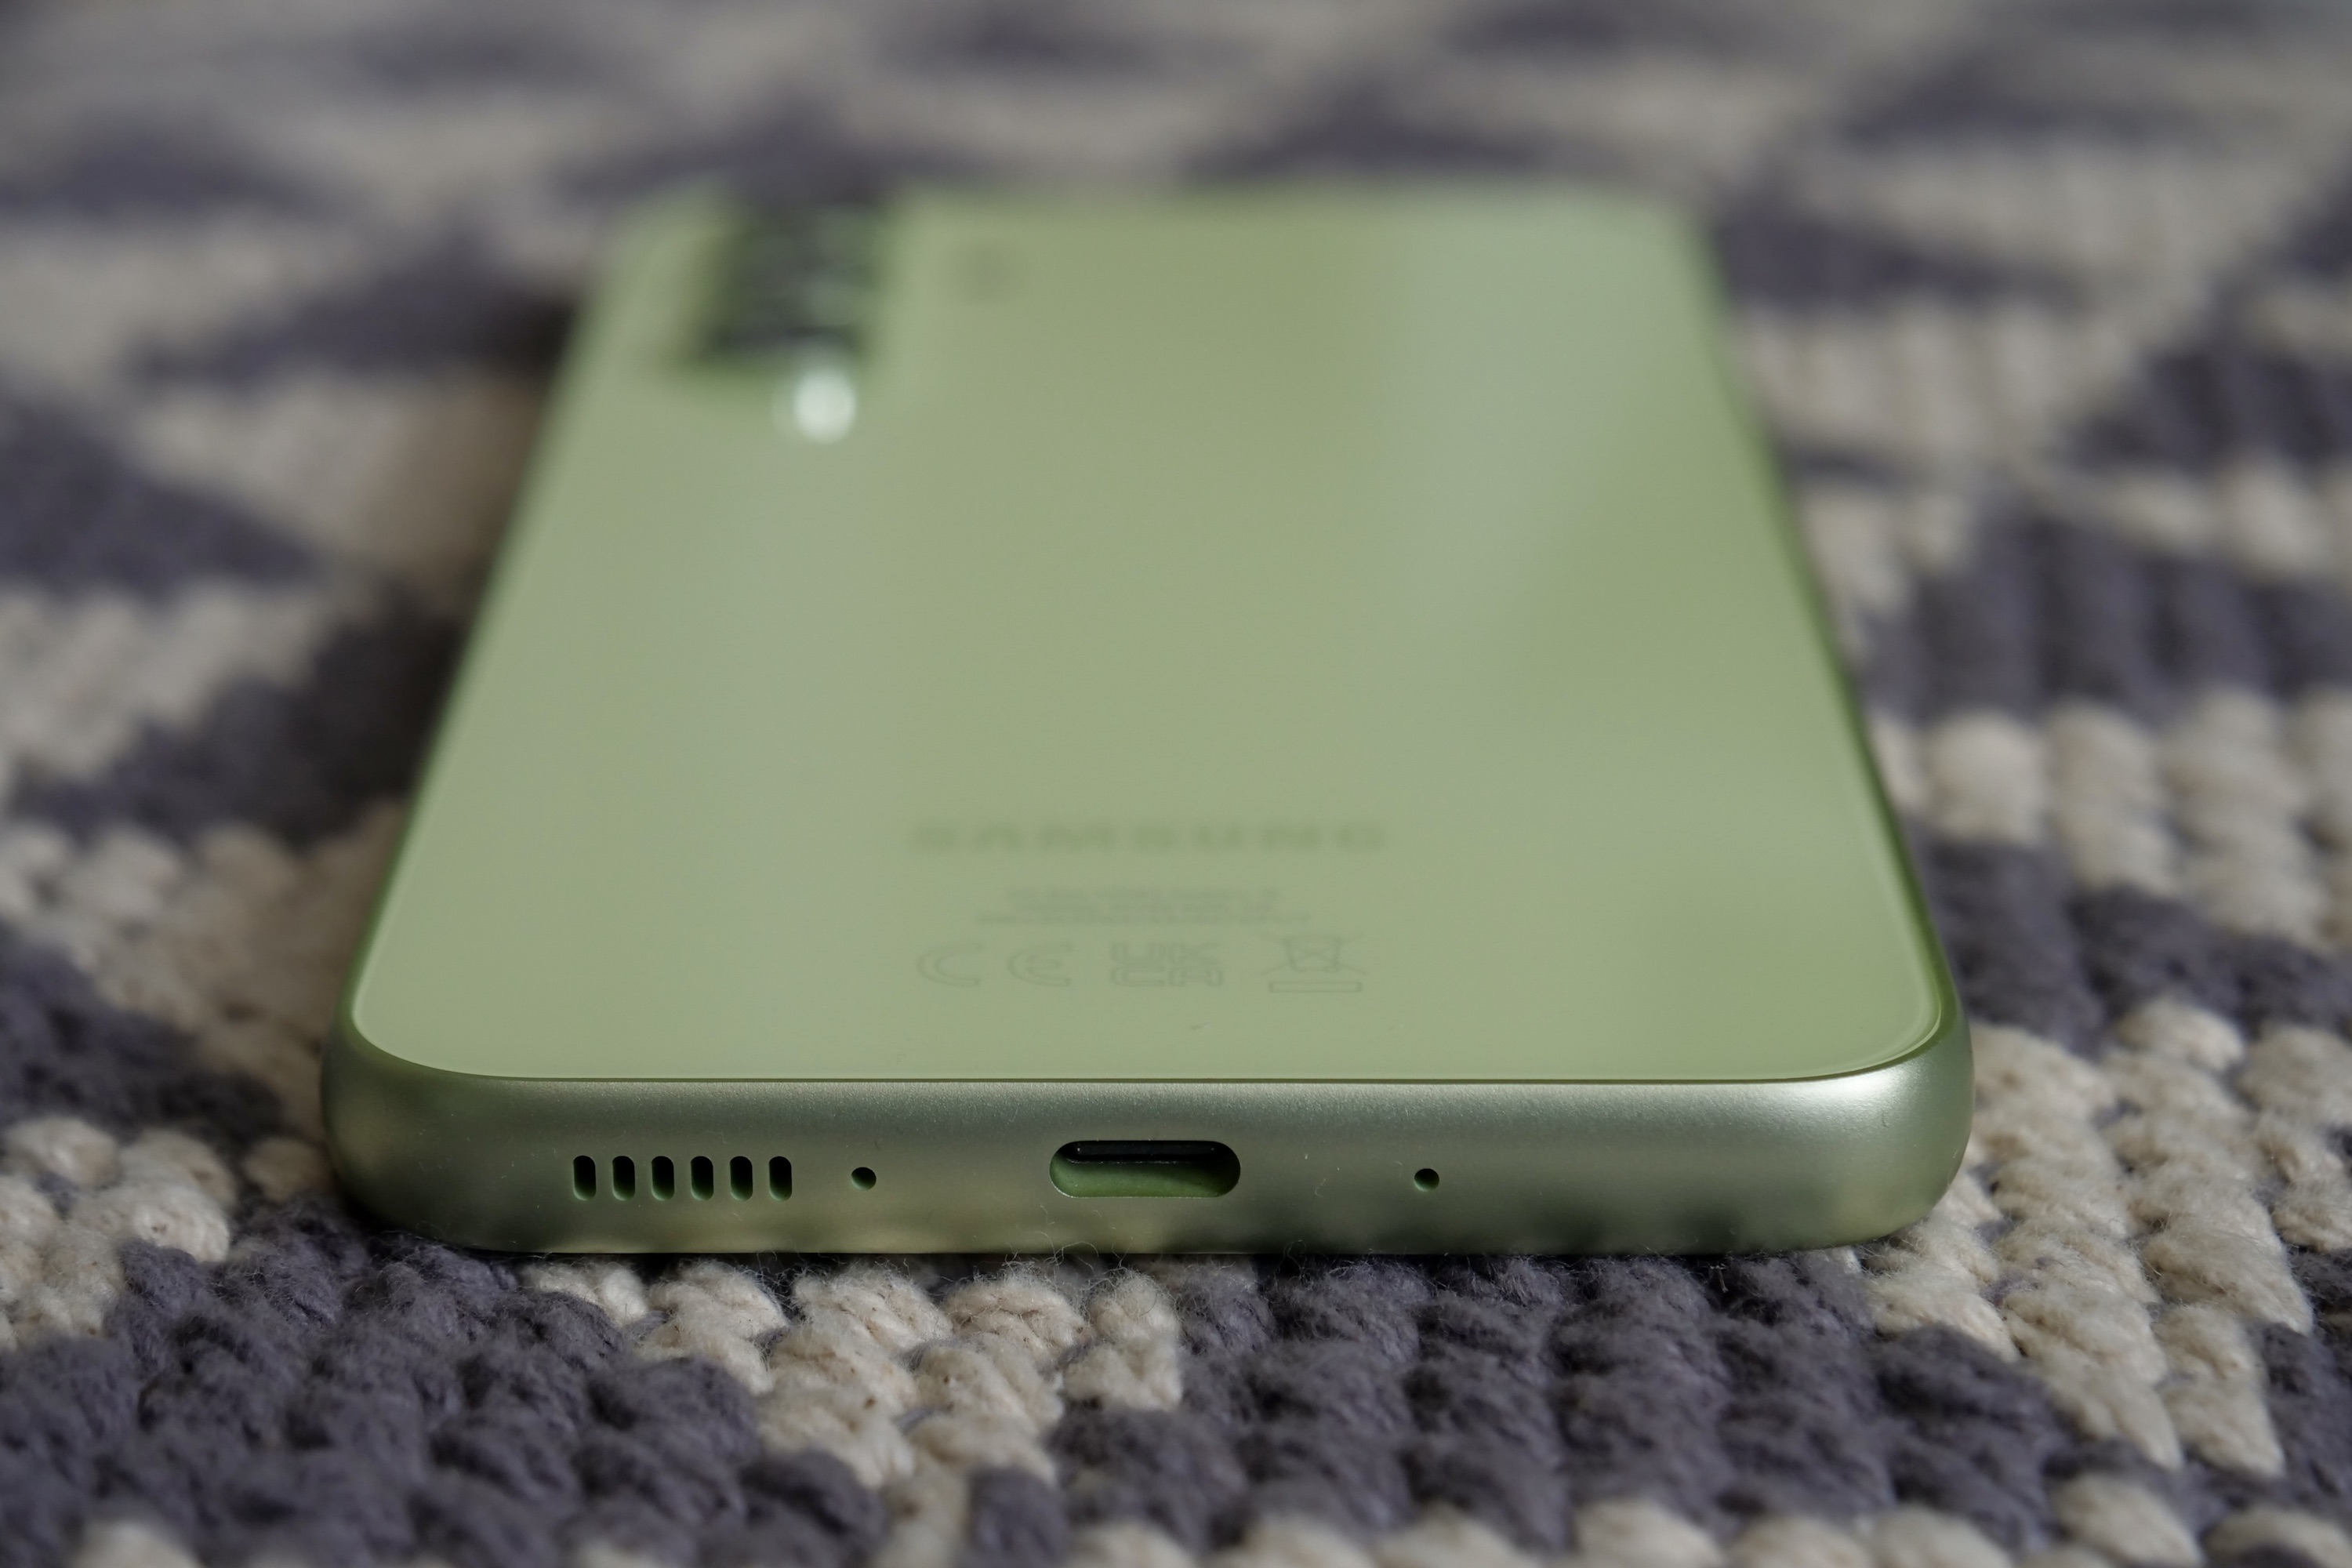 Brand New Samsung Galaxy A54 5G 128GB 6GB Smart Phone Unlocked